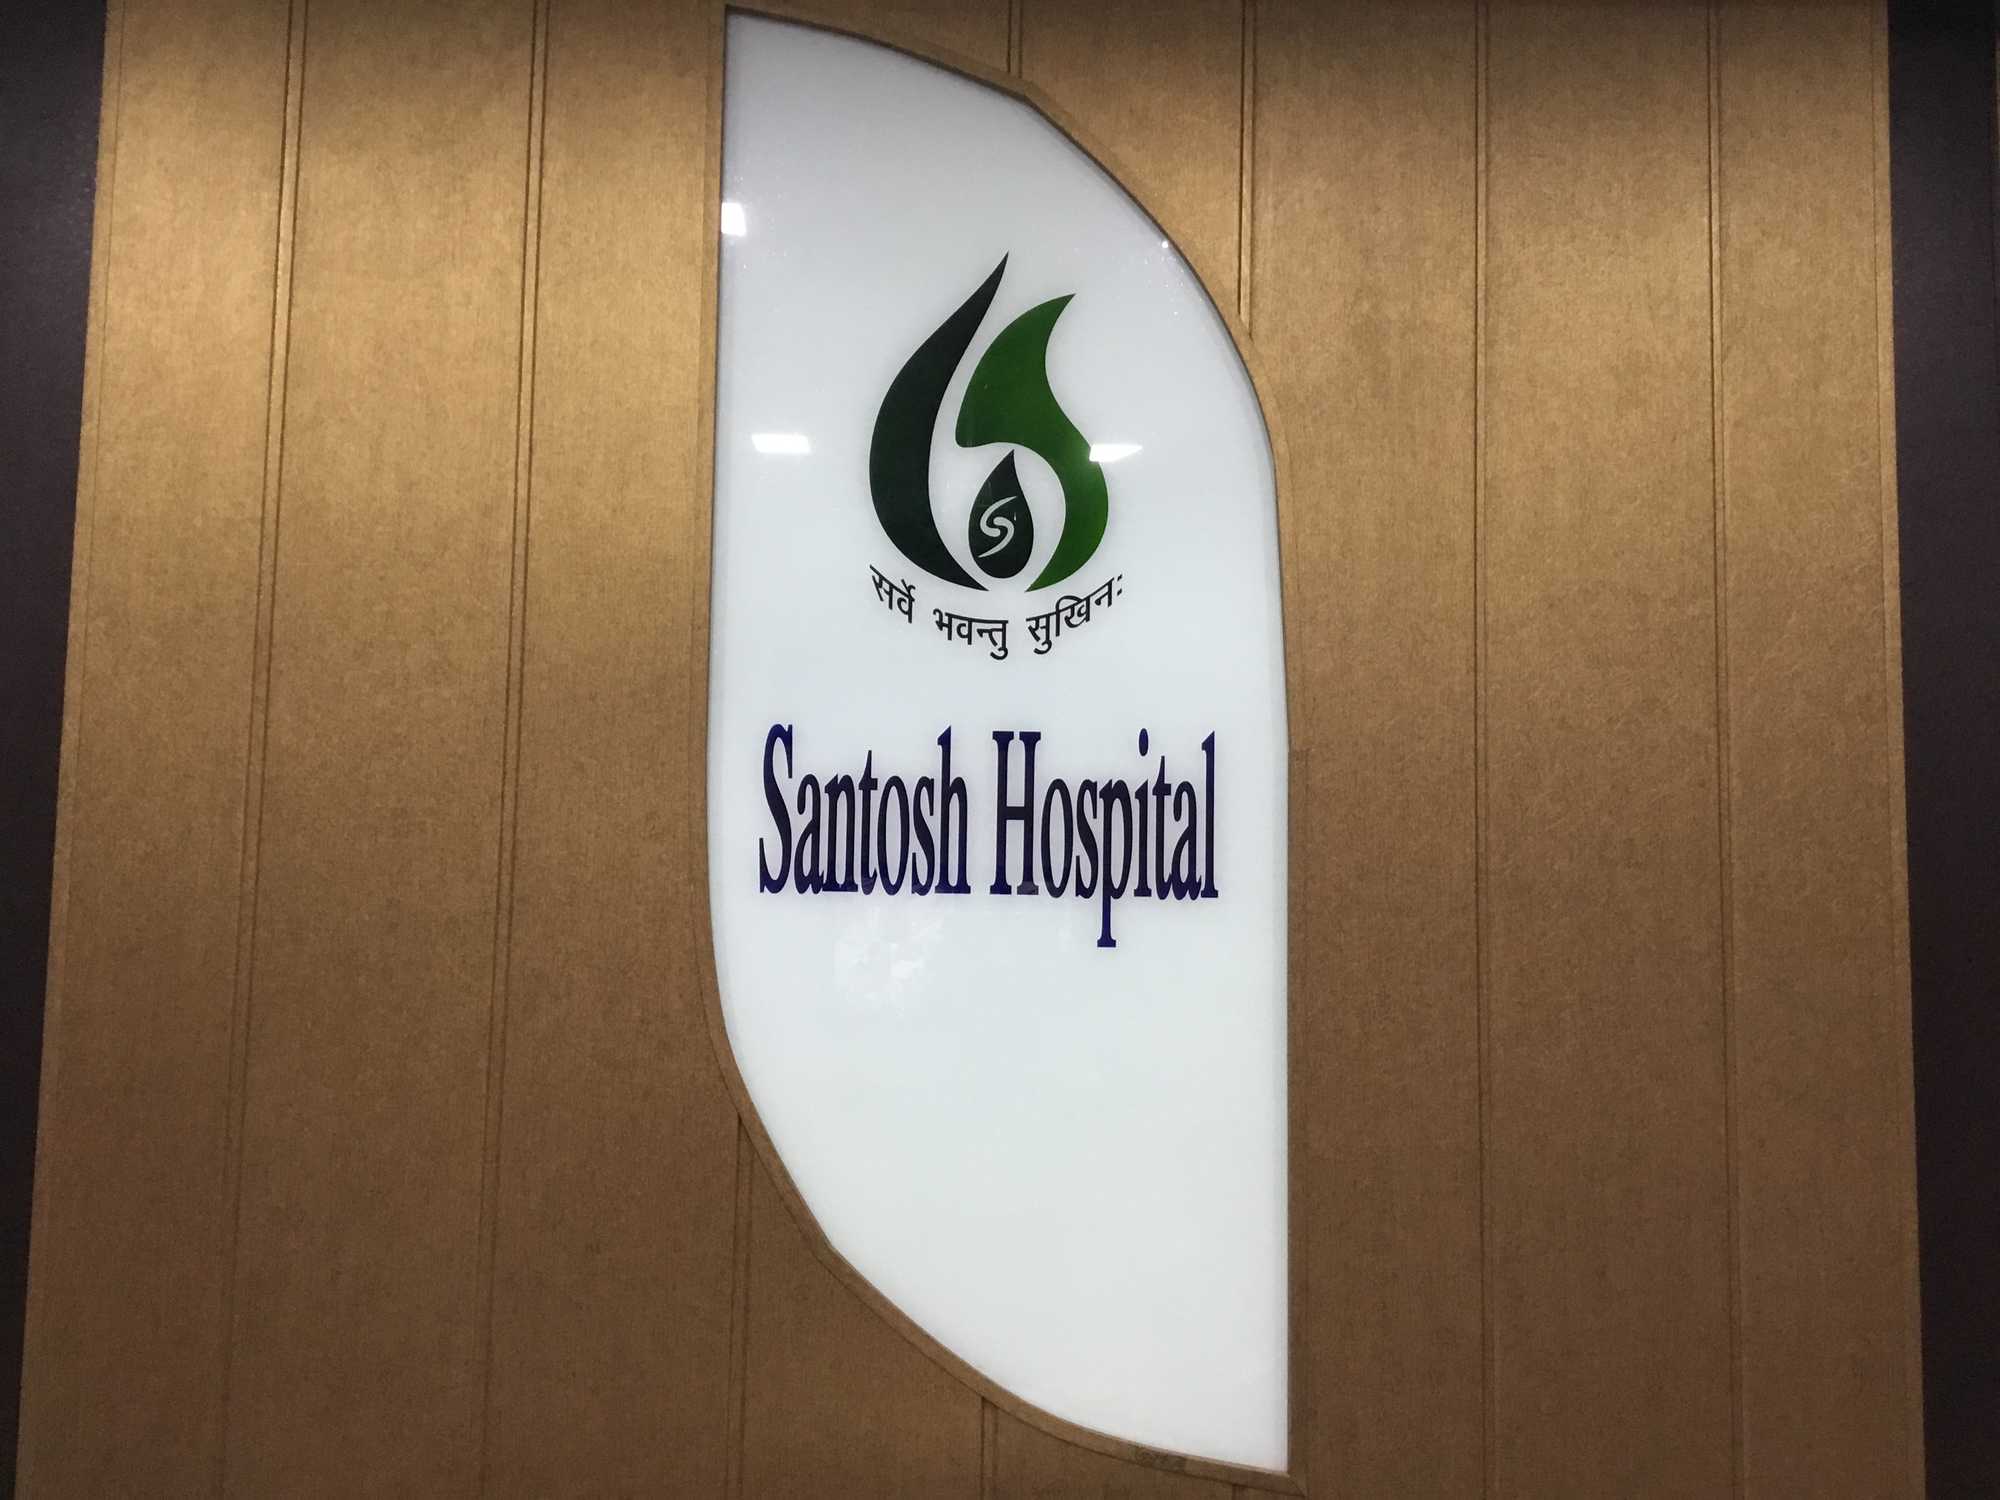 Santosh Hospital|Hospitals|Medical Services